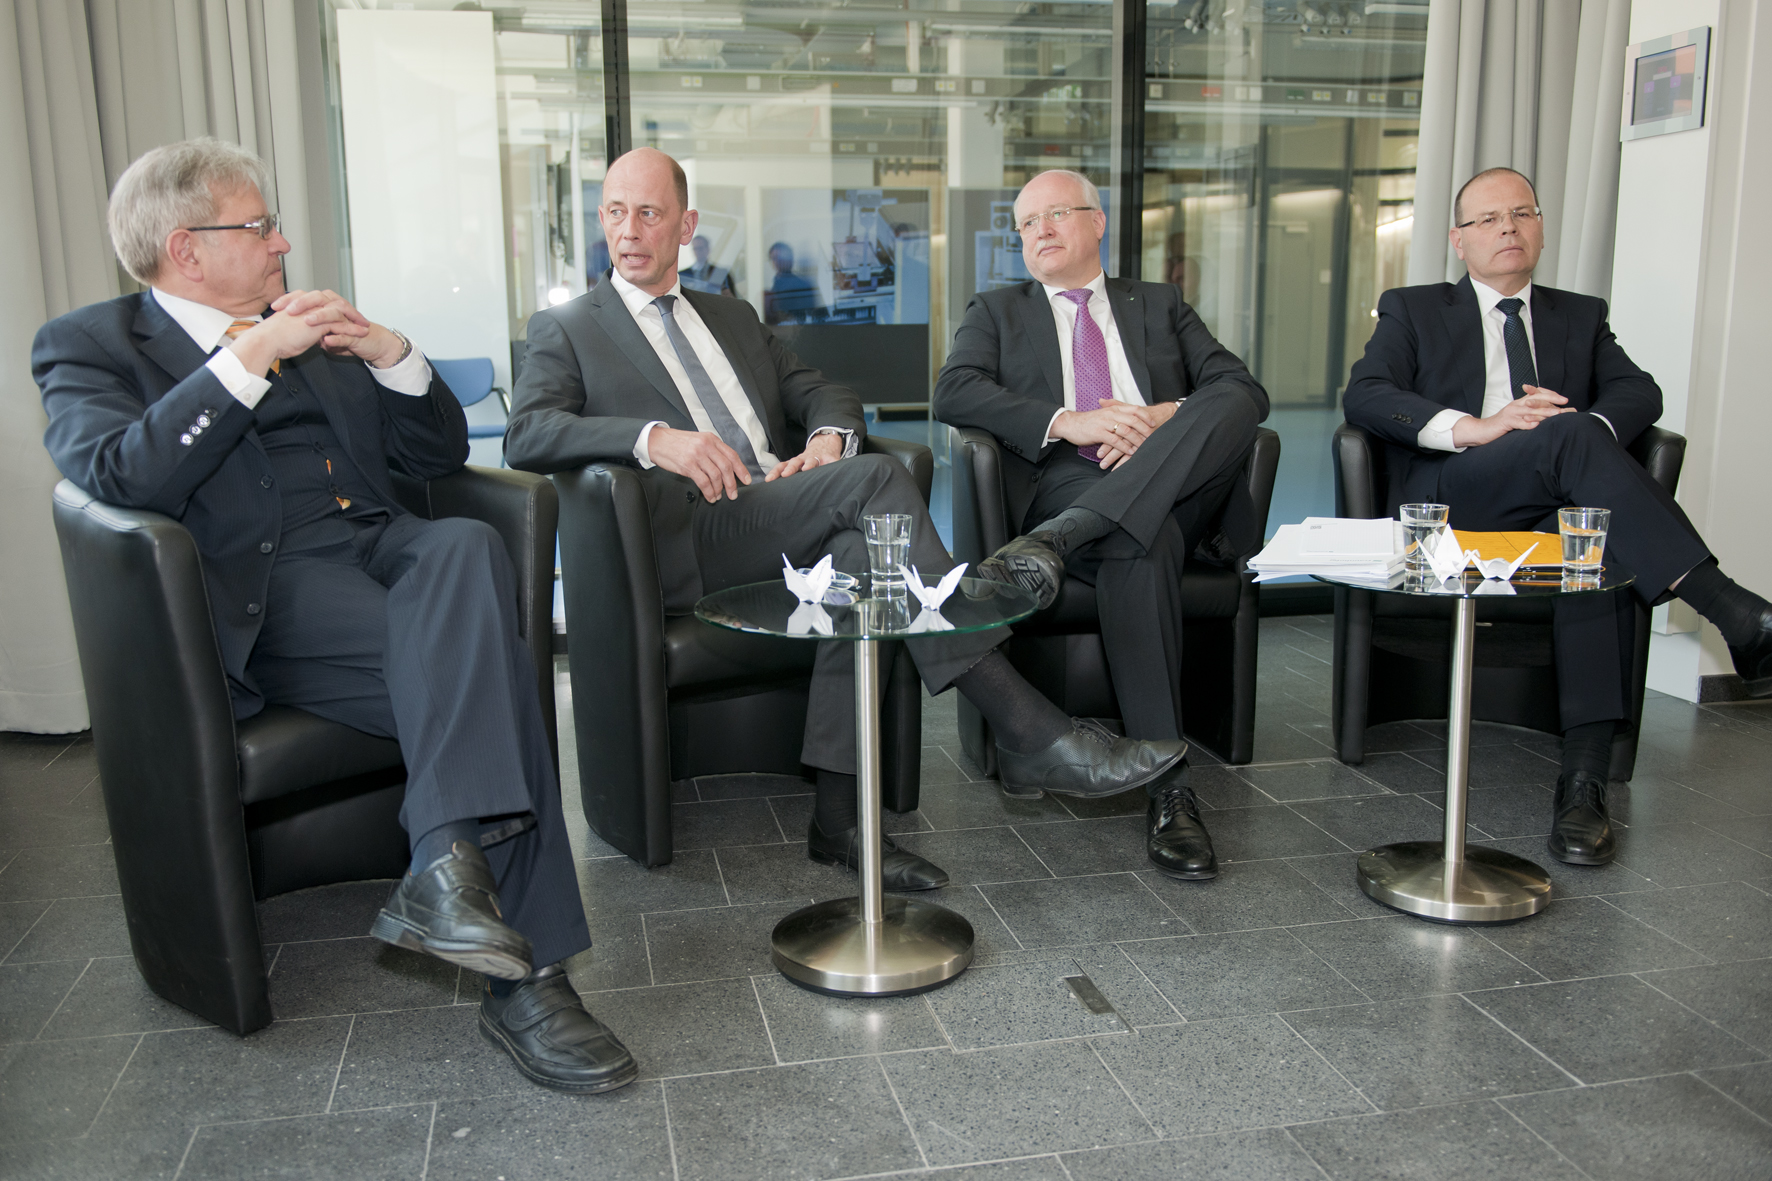 Press conference with Professor Frank Emmrich, Wolfgang Tiefensee, Professor Alexander Kurz and Uwe Albrecht